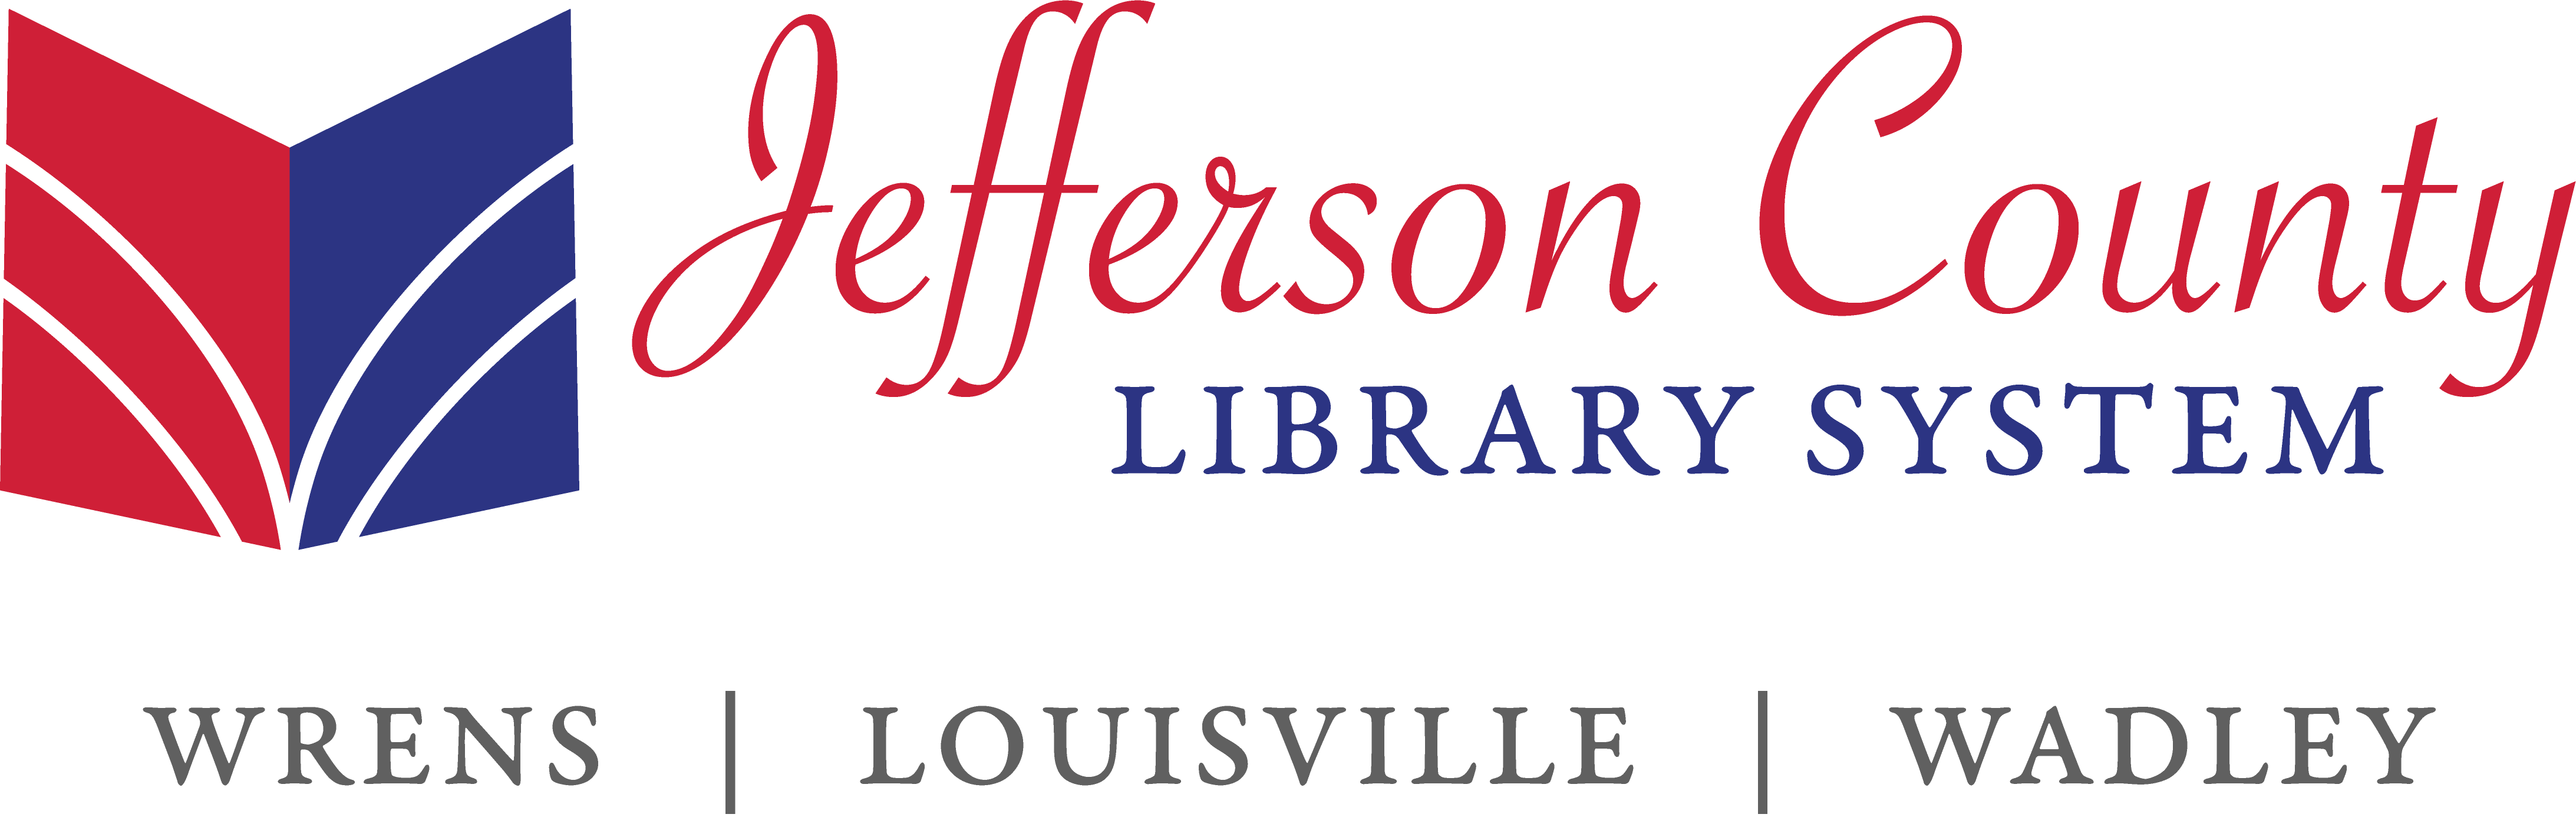 Jefferson County Library System logo